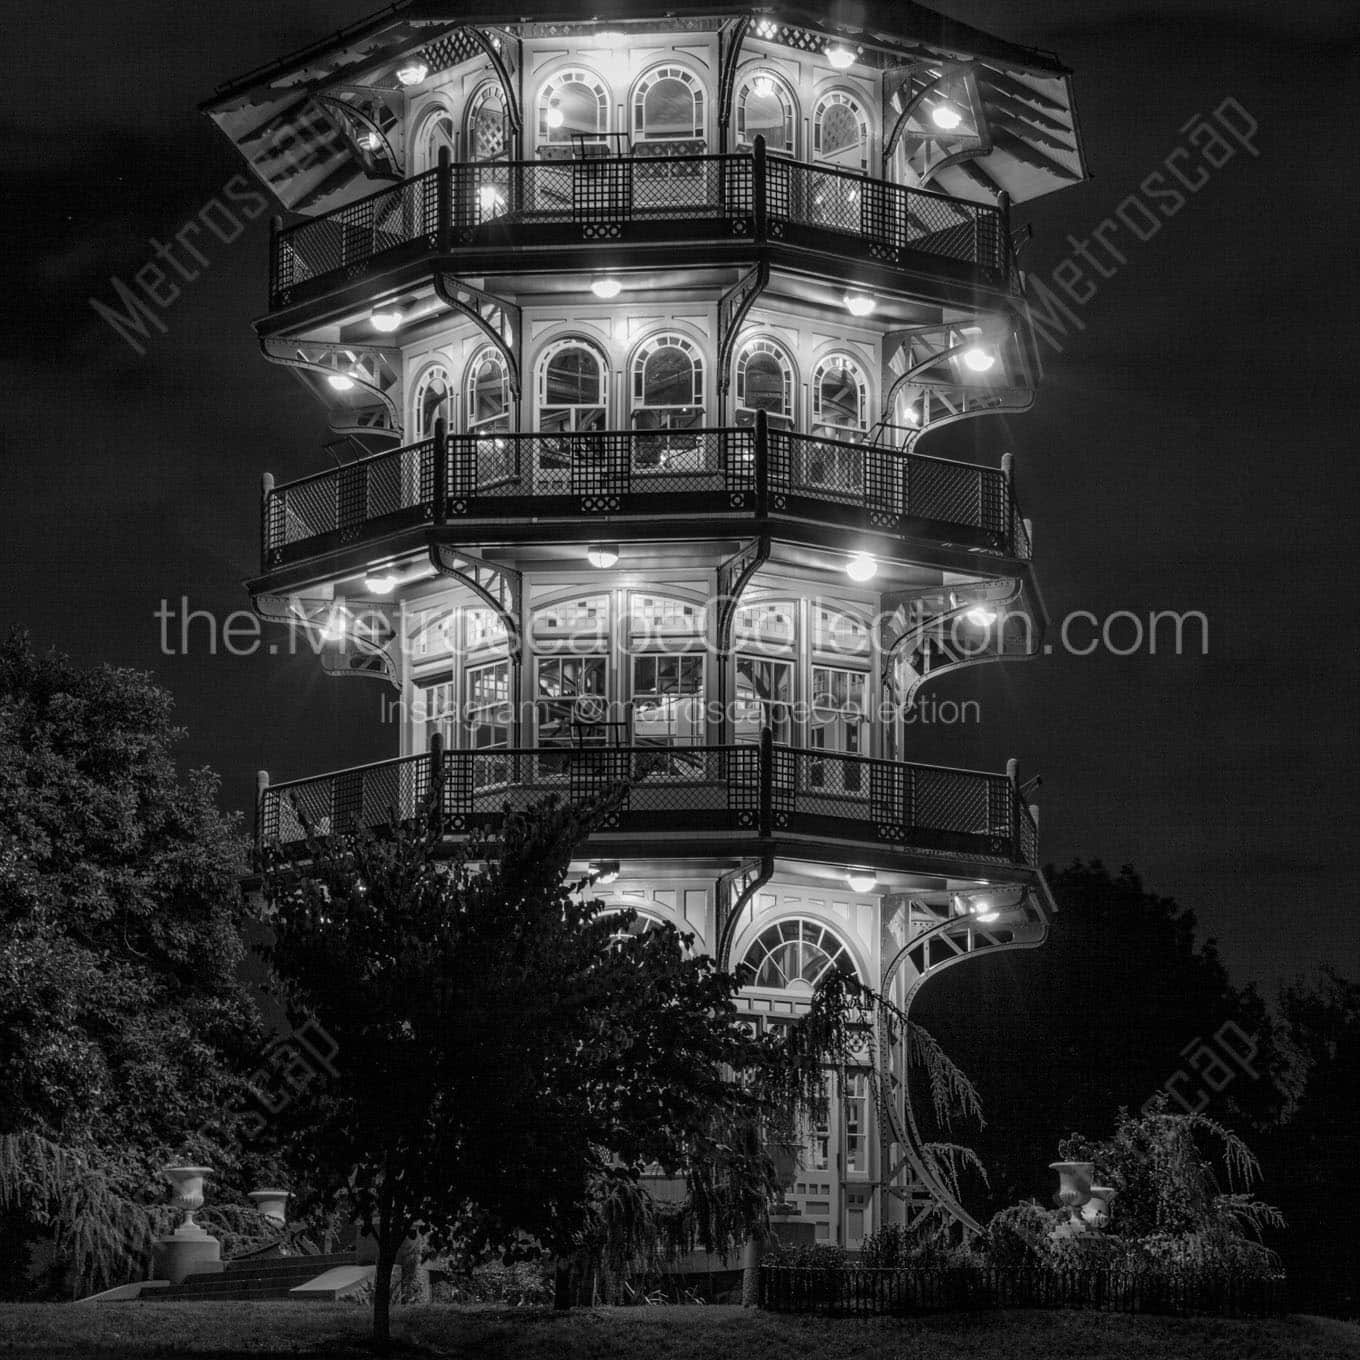 patterson park pagoda at night Black & White Office Art